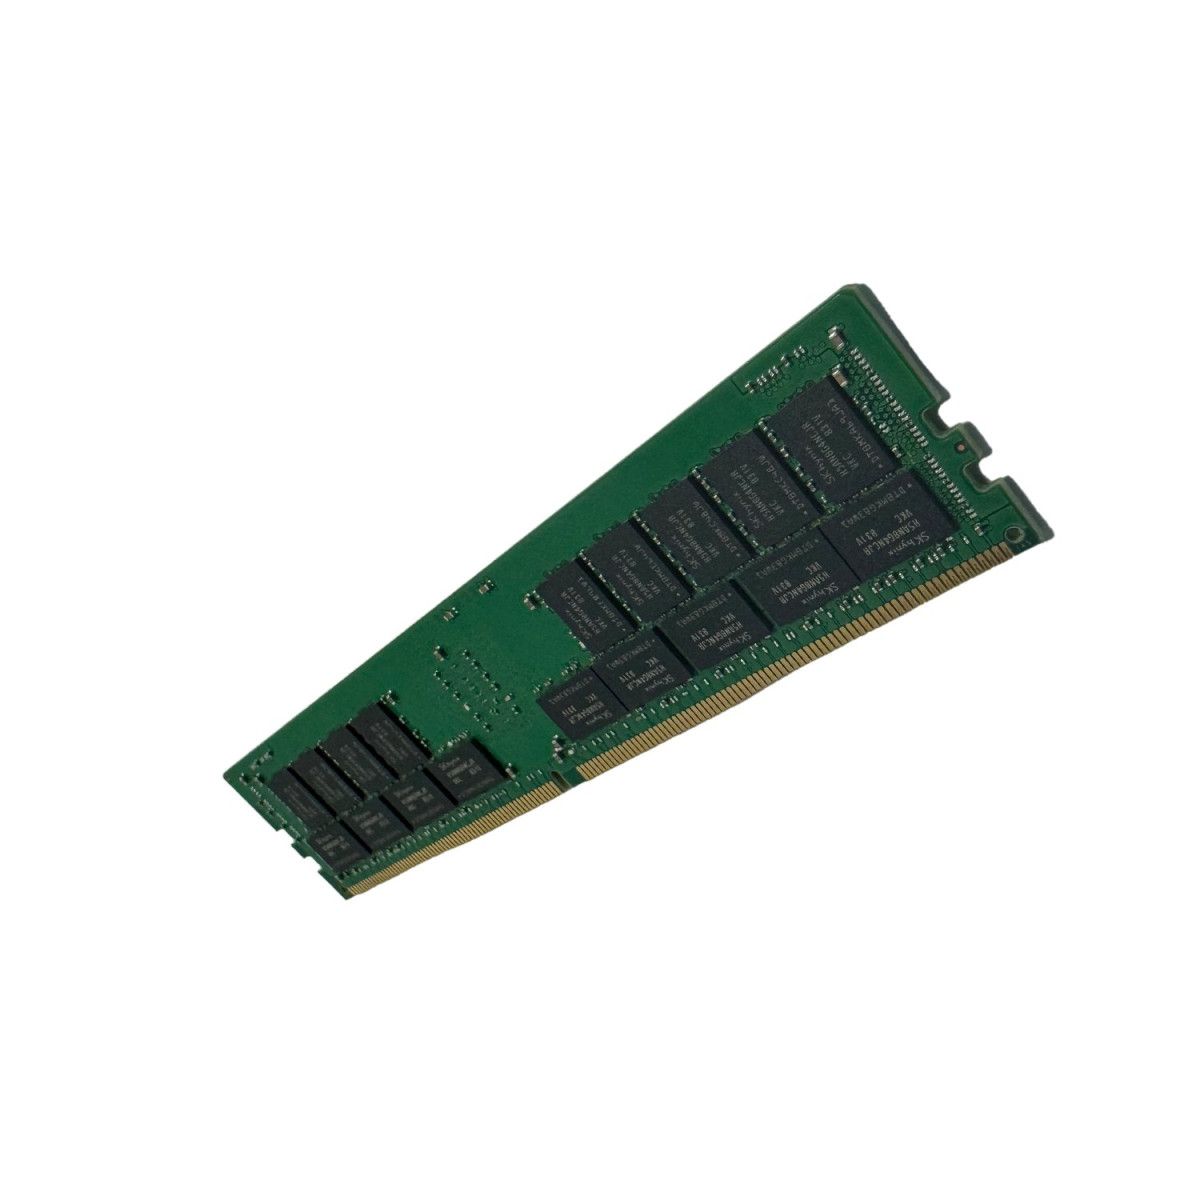 46C7444 - IBM 1x 4GB DDR3-1066 RDIMM PC3-8500R - Mem-Star Compatibile OEM Memoria 1 - Memstar 